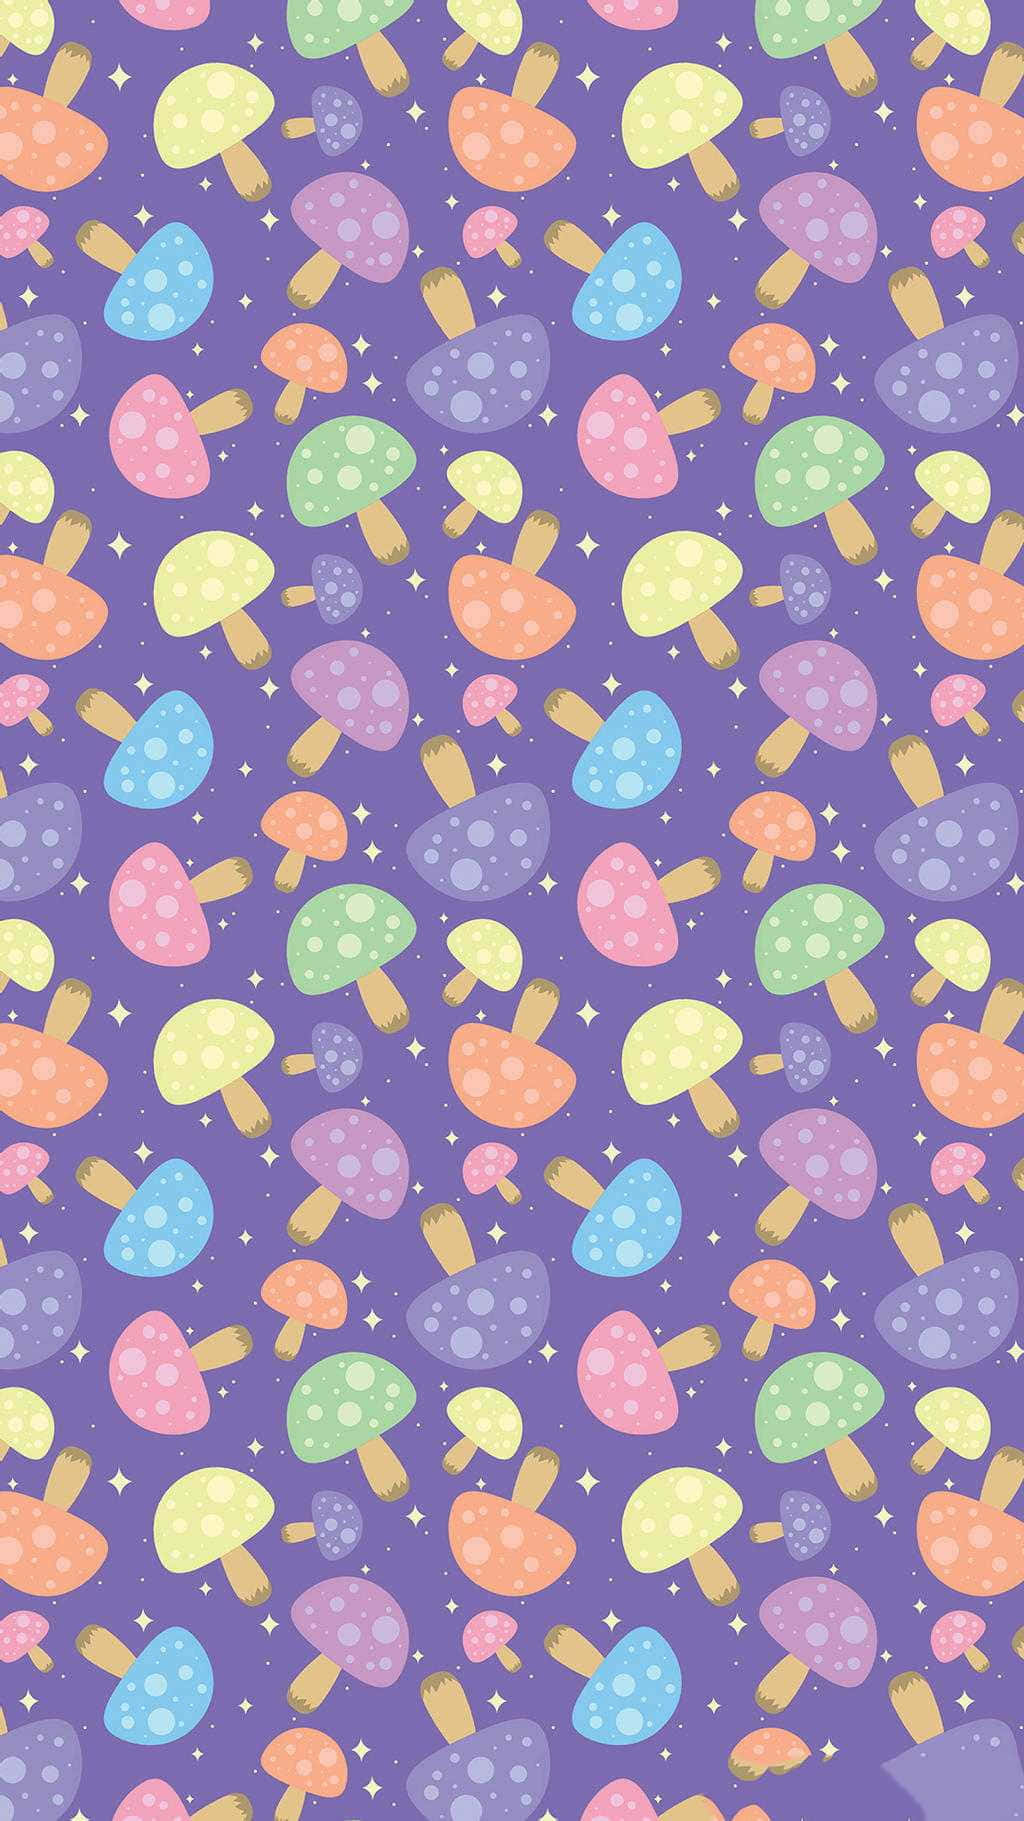 Kawaii Mushroom: A Cute and Whimsical Adventure Wallpaper